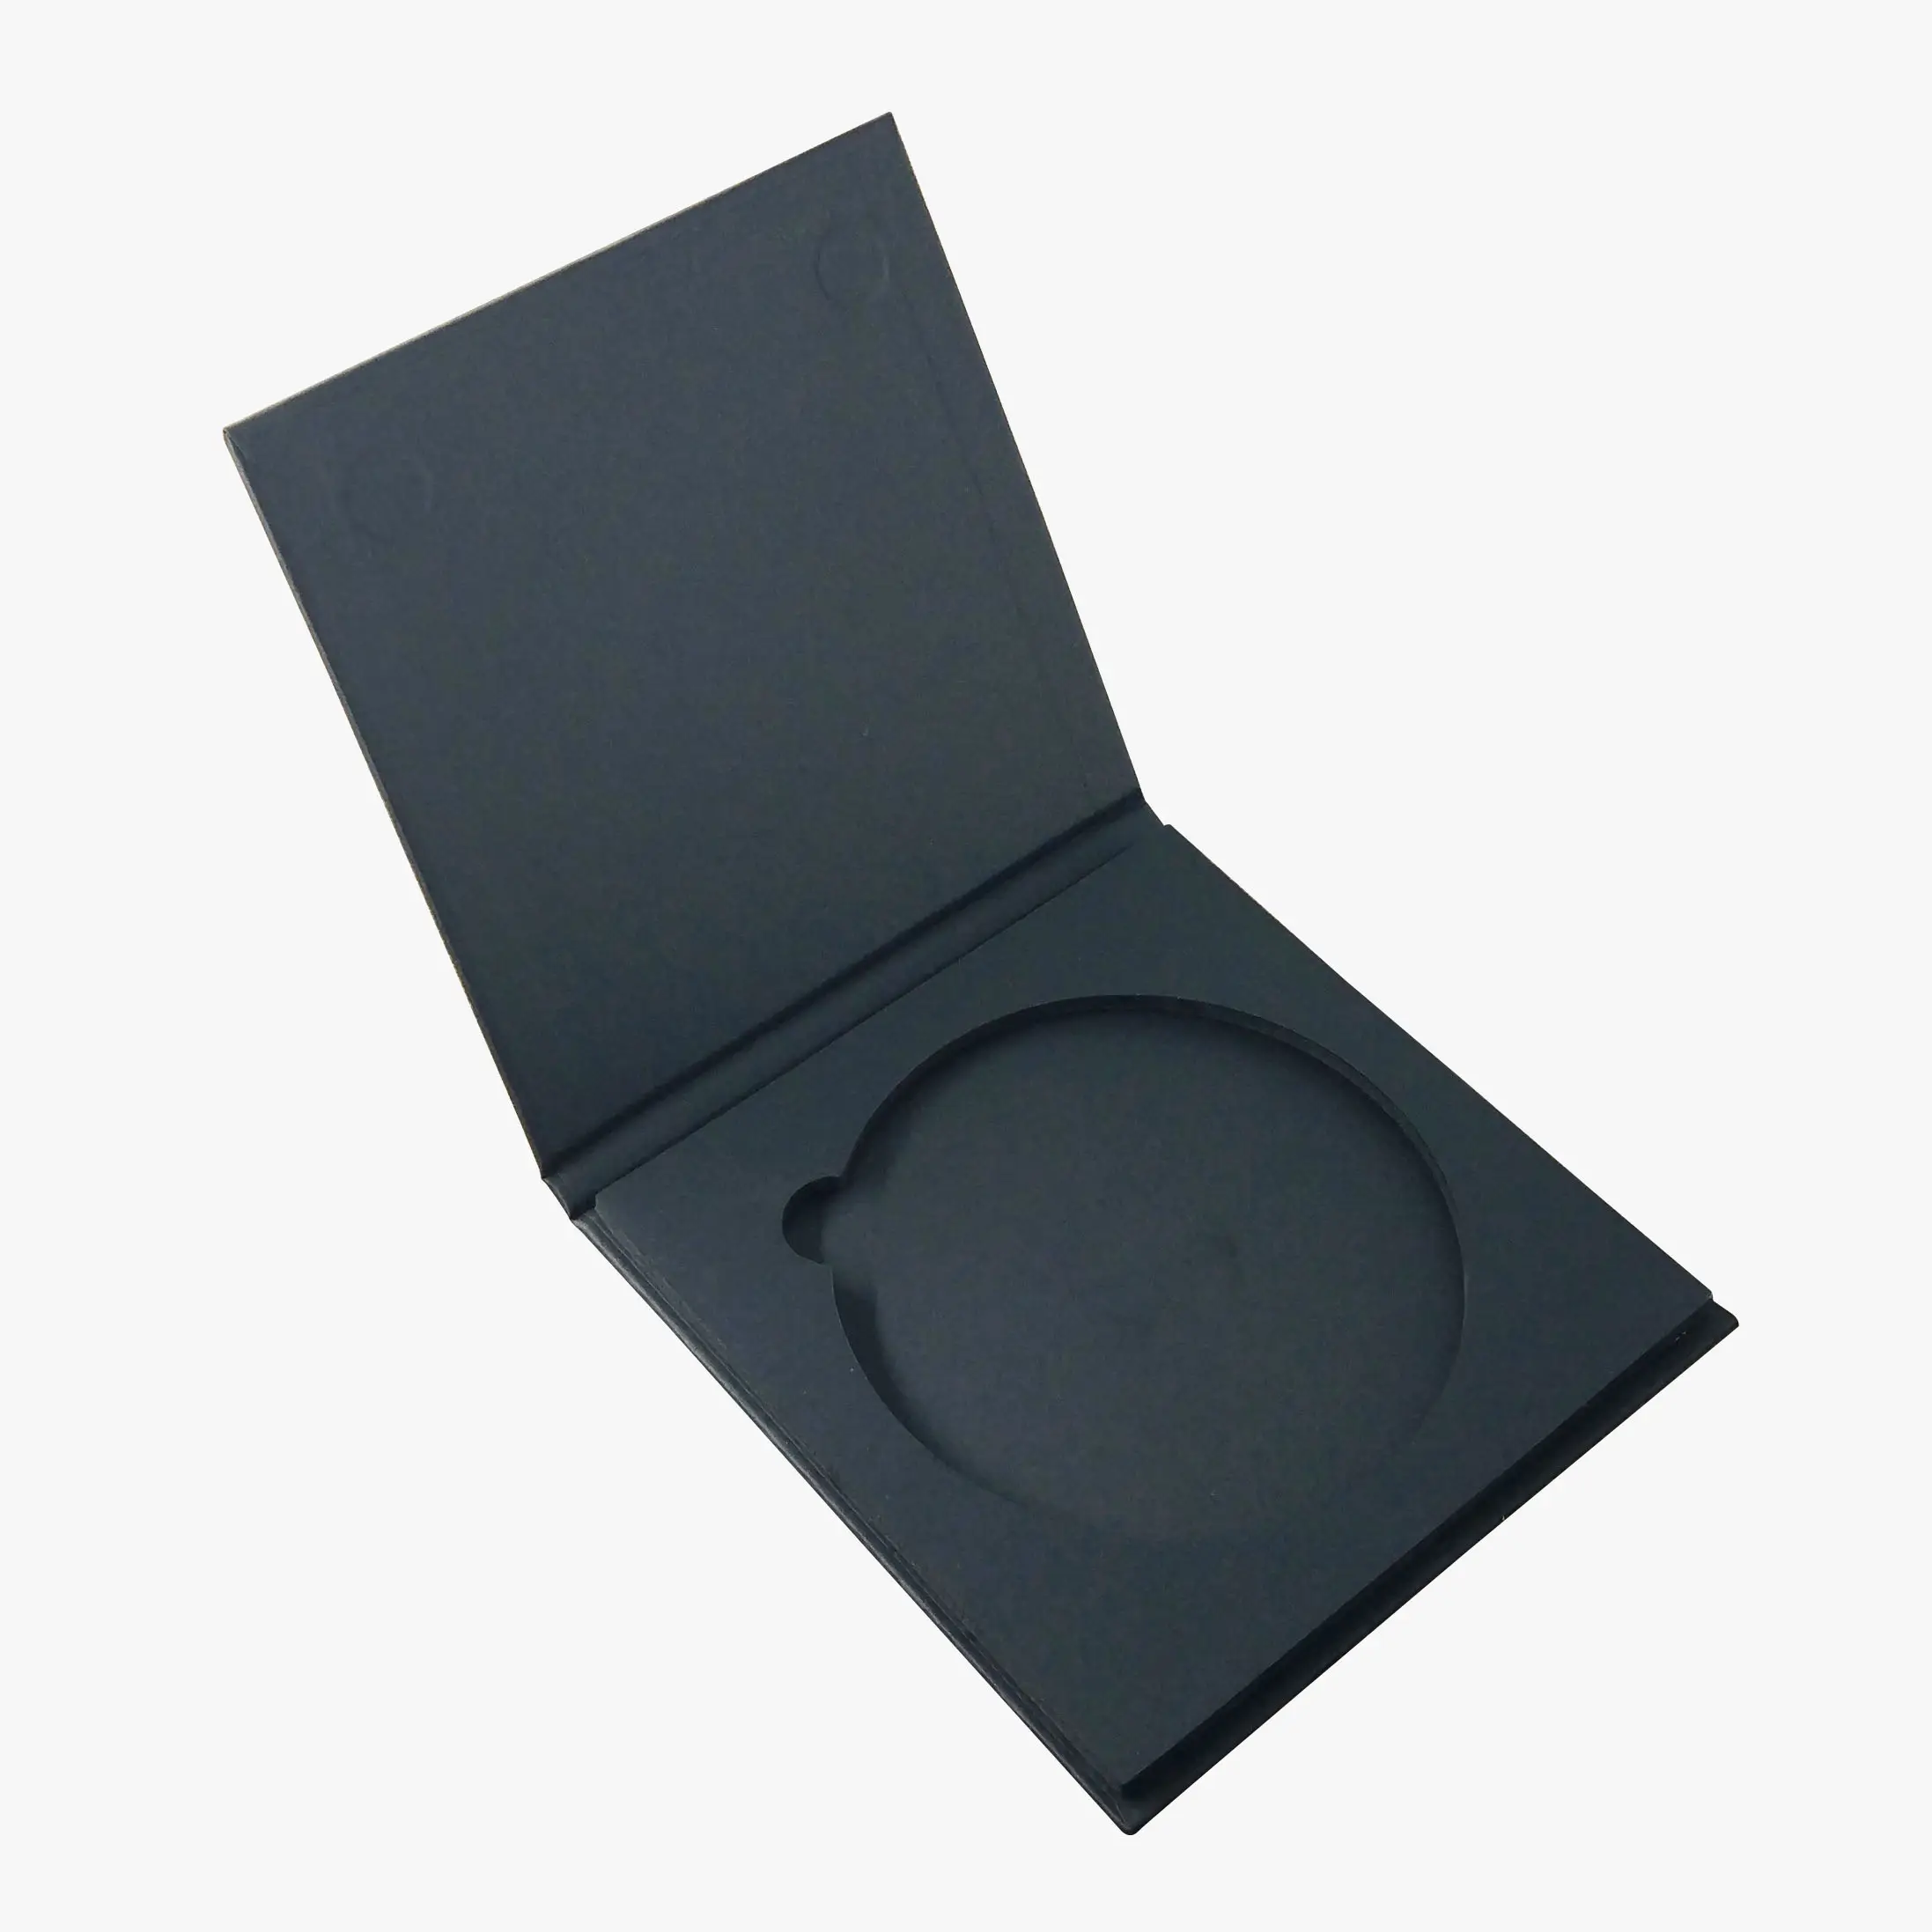 Caja de embalaje de papel para dvd, cd, color negro mate, diseño Simple